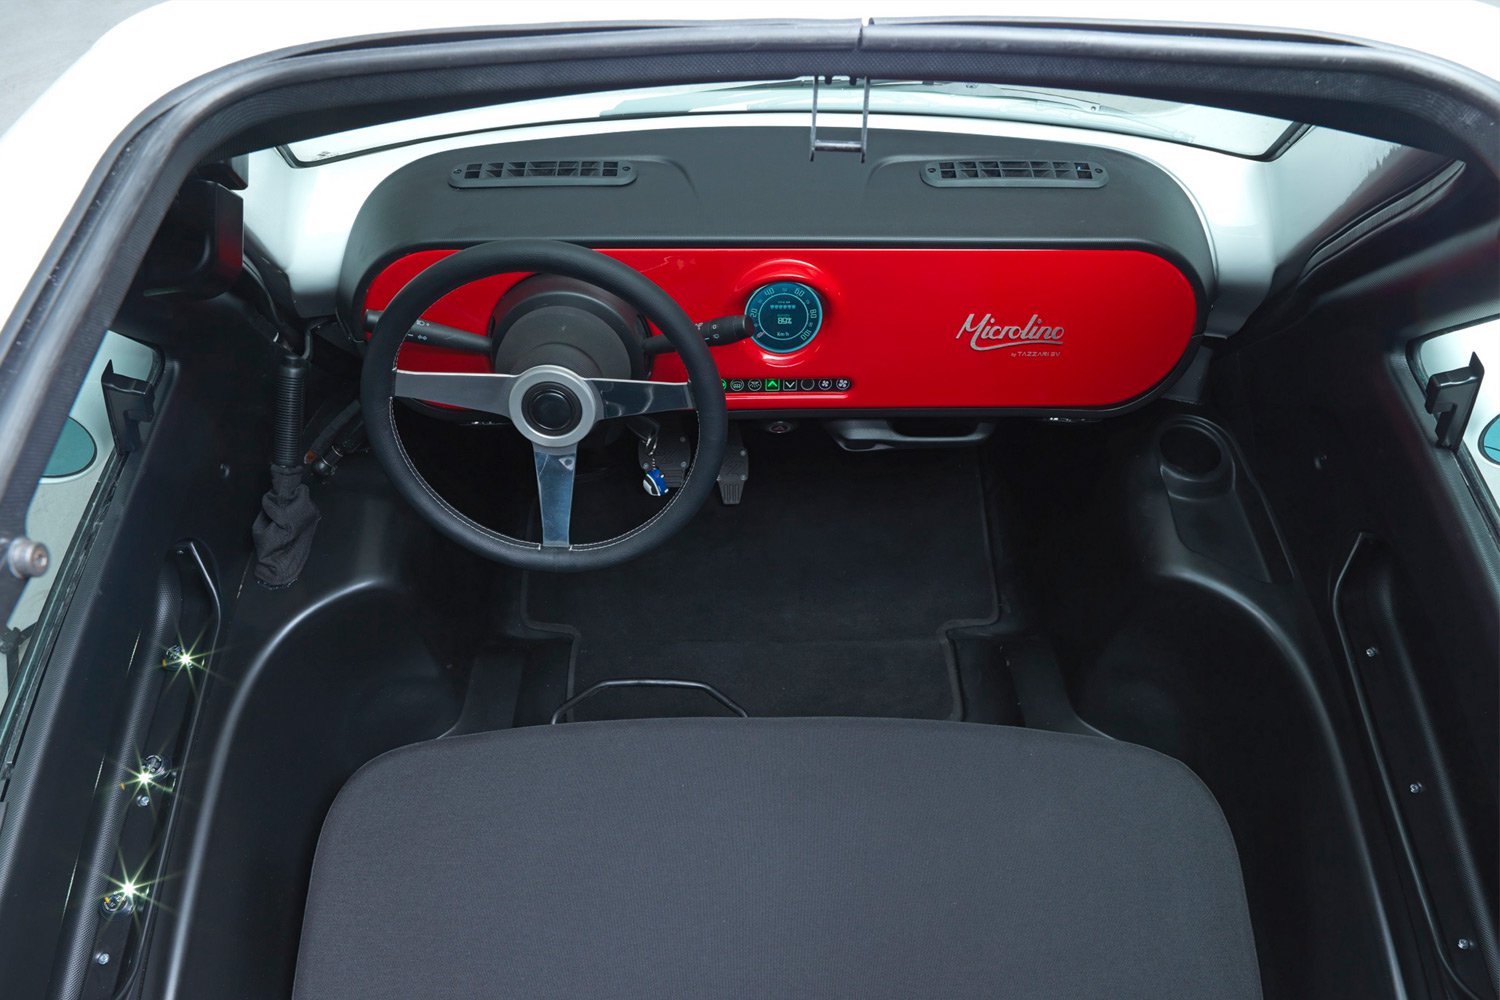 microlino-car-red-interior-002